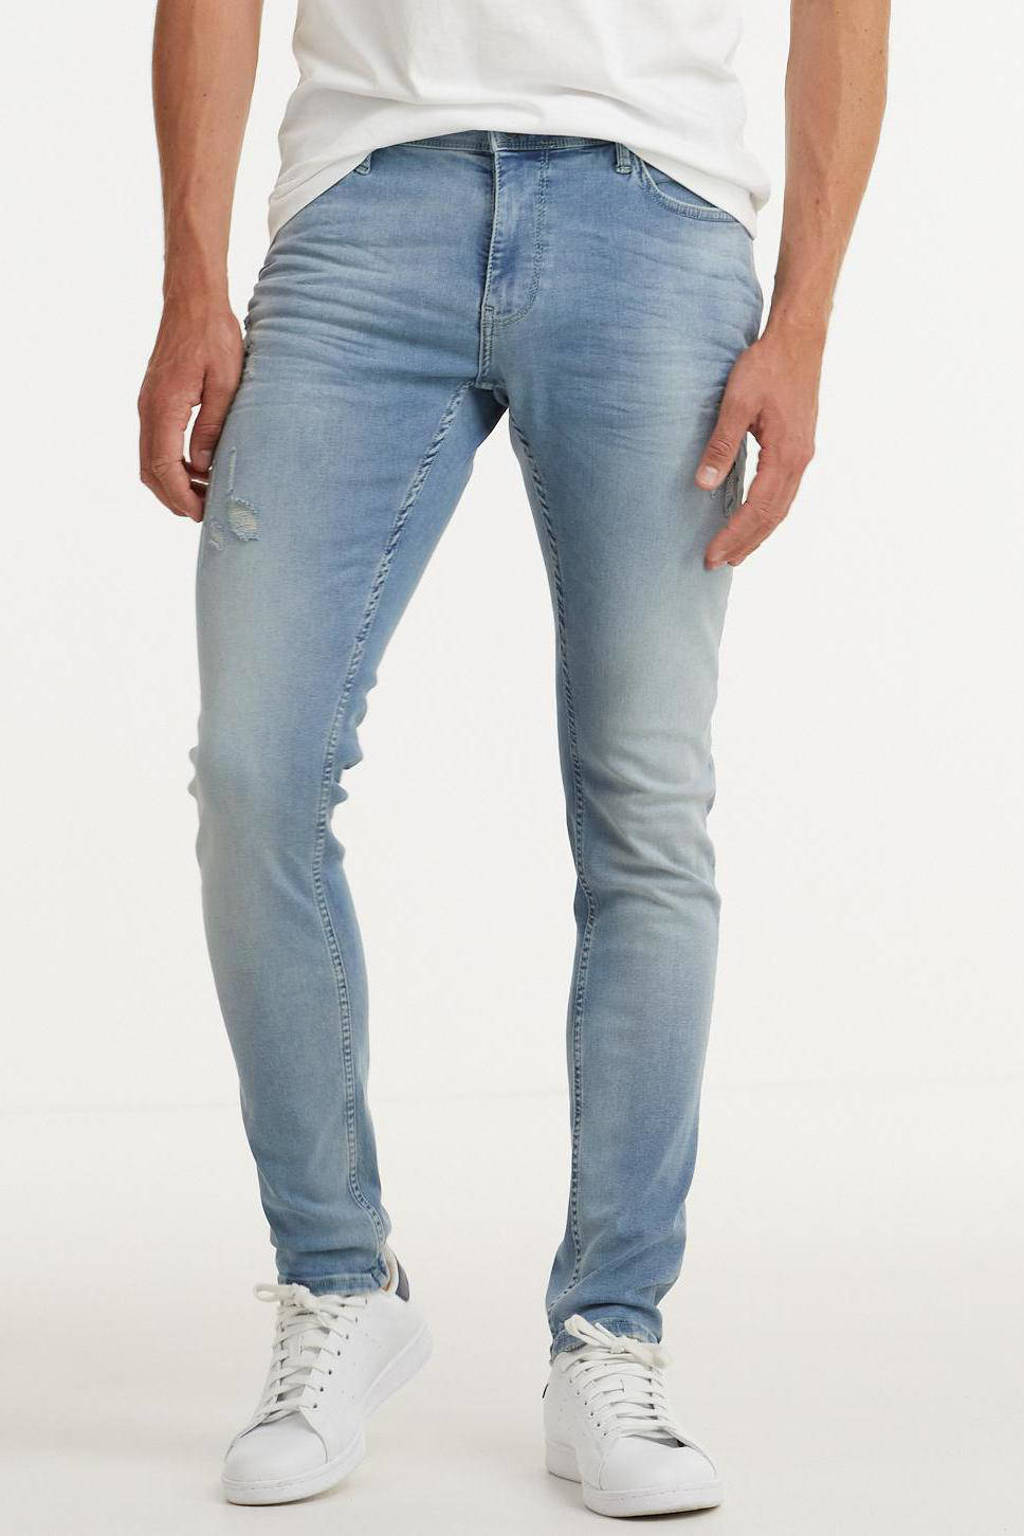 Purewhite skinny jeans The Jone W0611 light denim